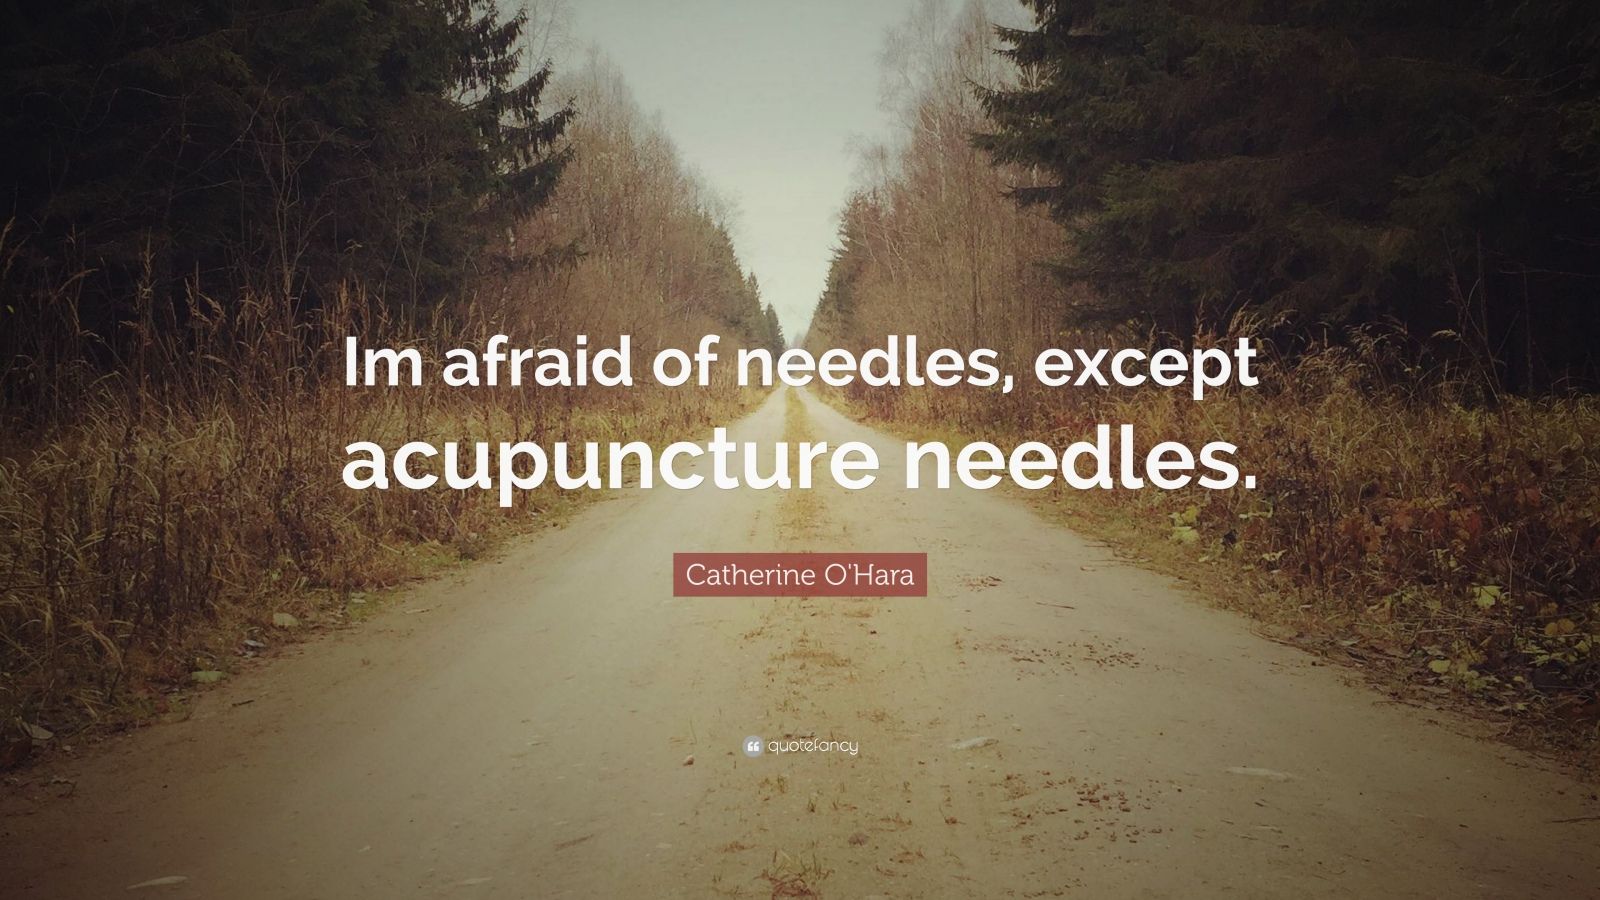 Catherine O'Hara Quote: “Im afraid of needles, except acupuncture needles.”